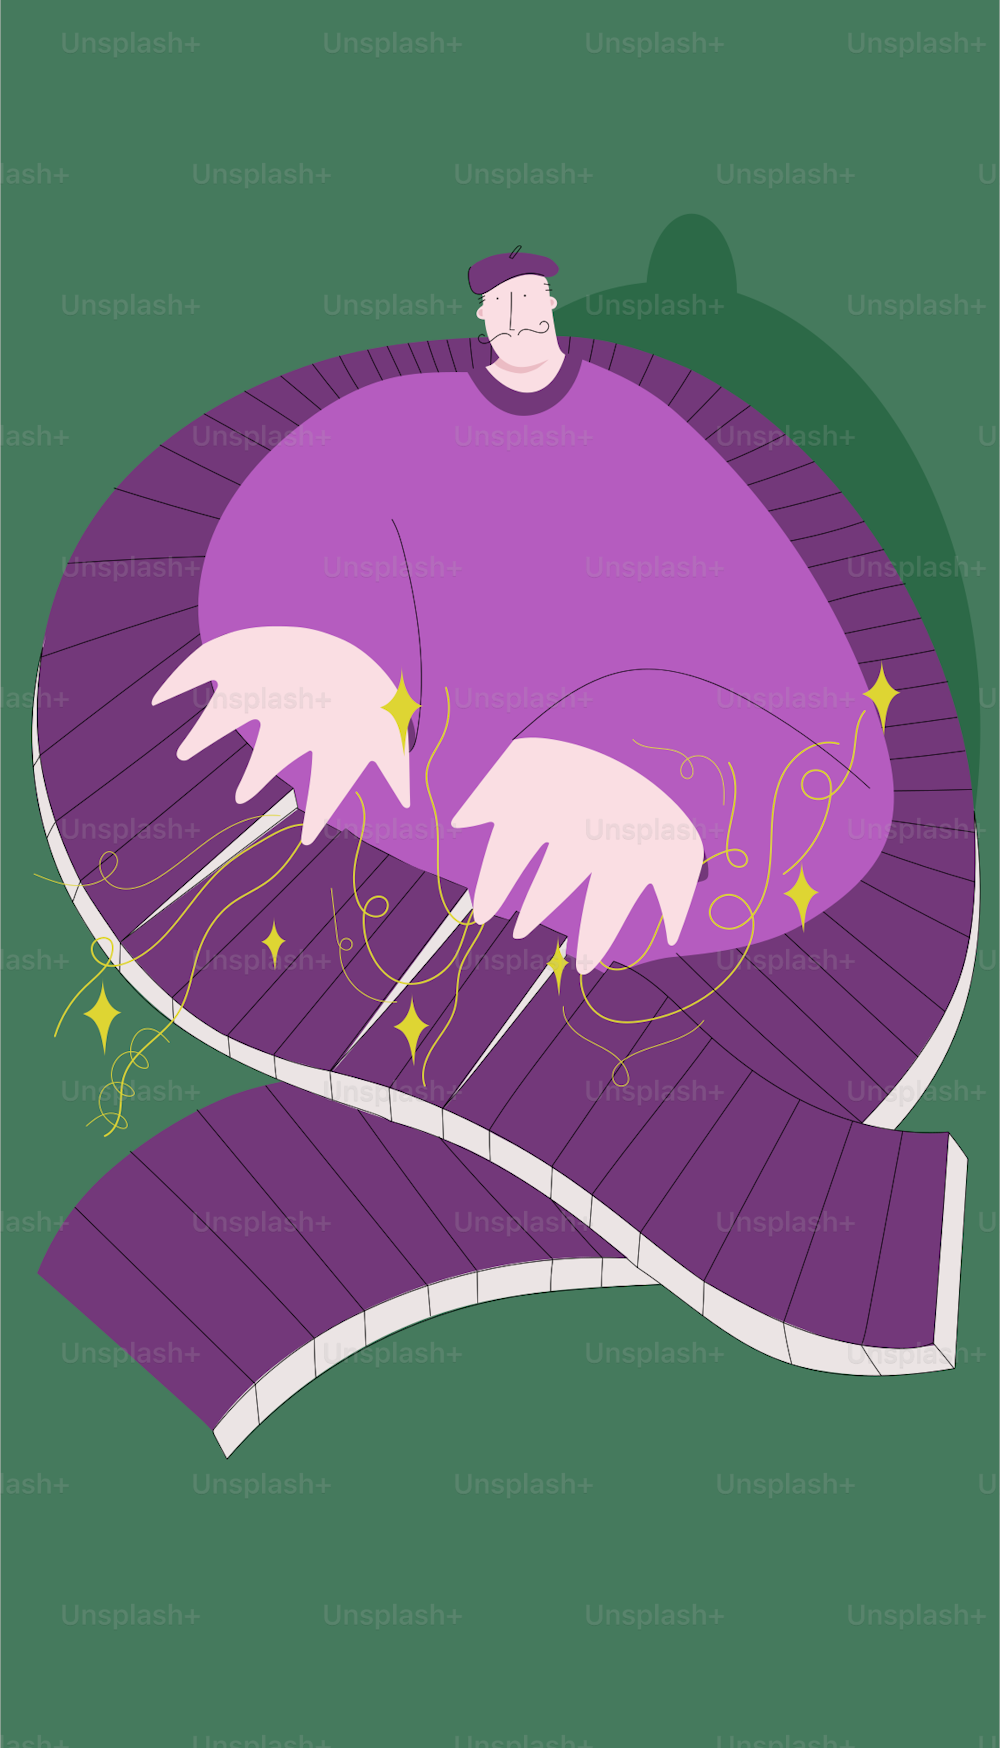 Un dibujo de una persona acostada encima de un objeto púrpura